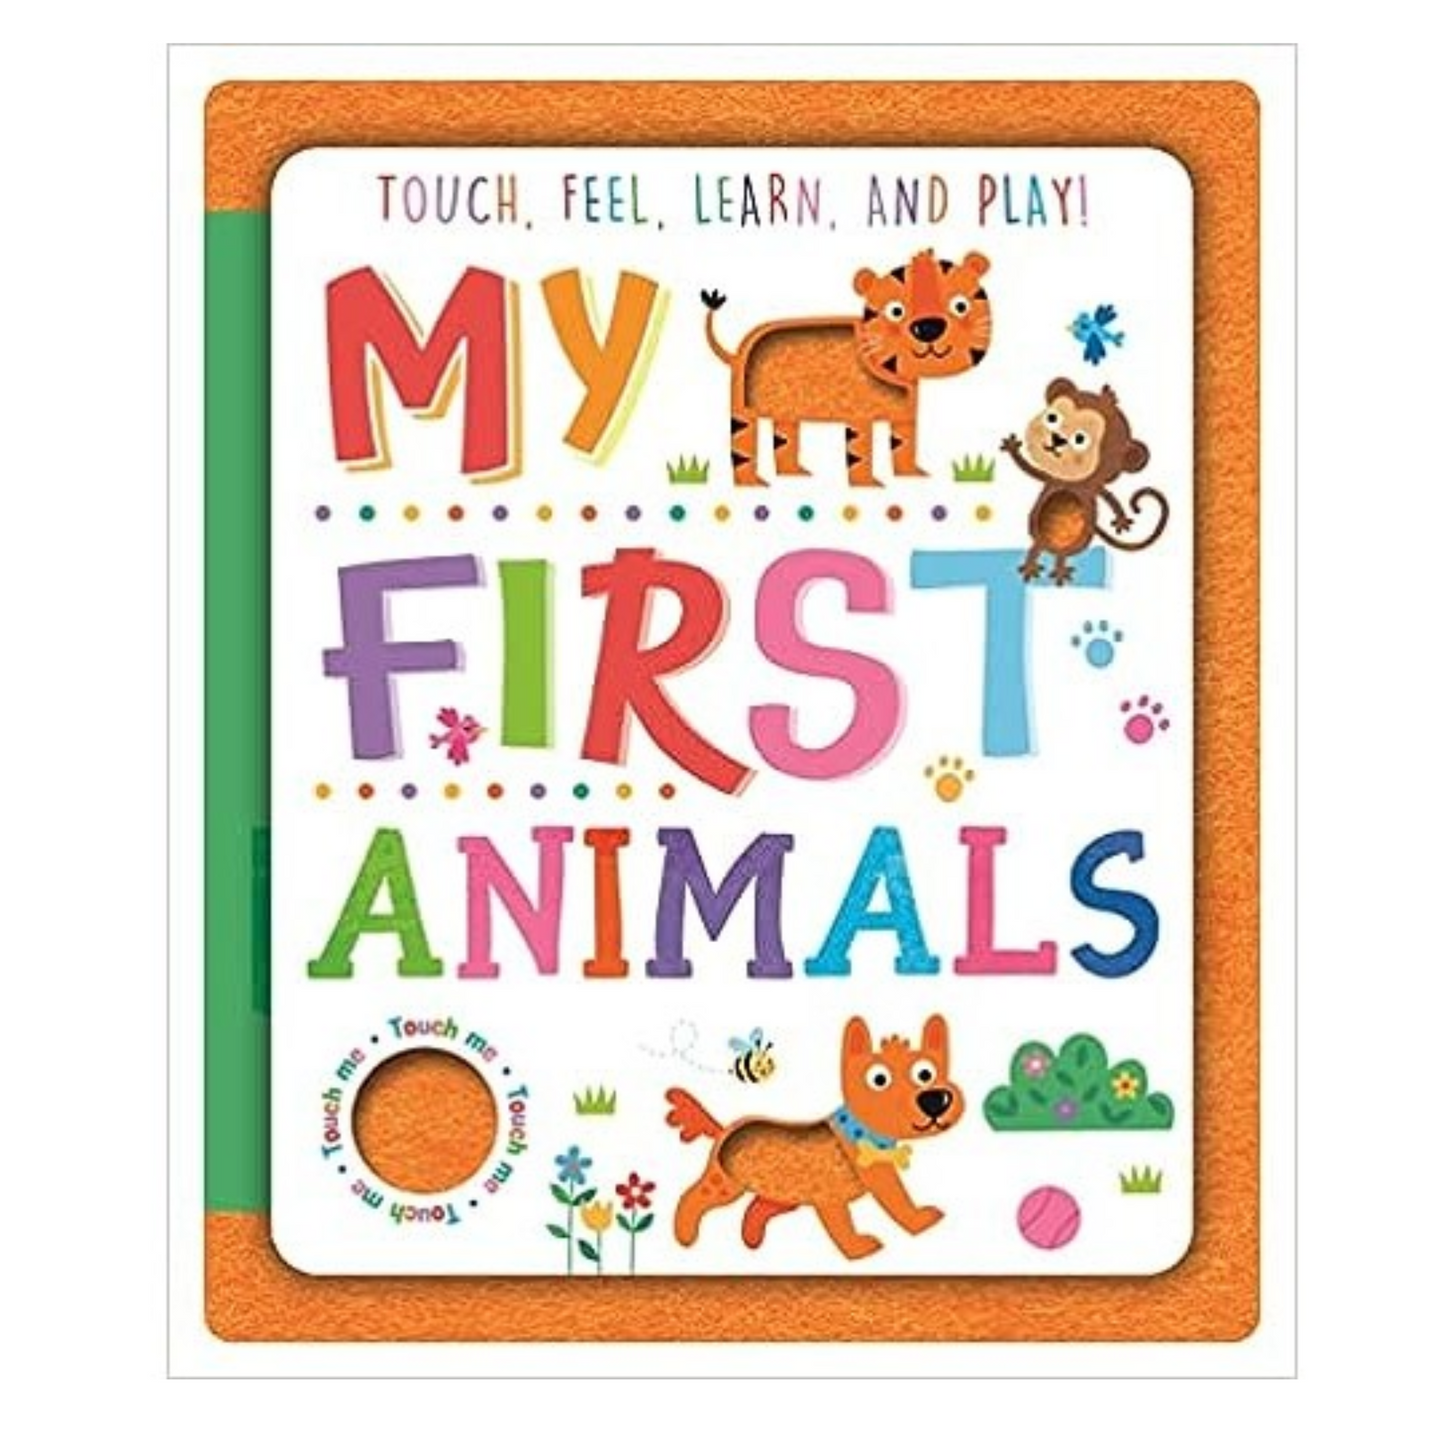 My First Animals (Sensory Felt Book) - Interest age 3-6 years